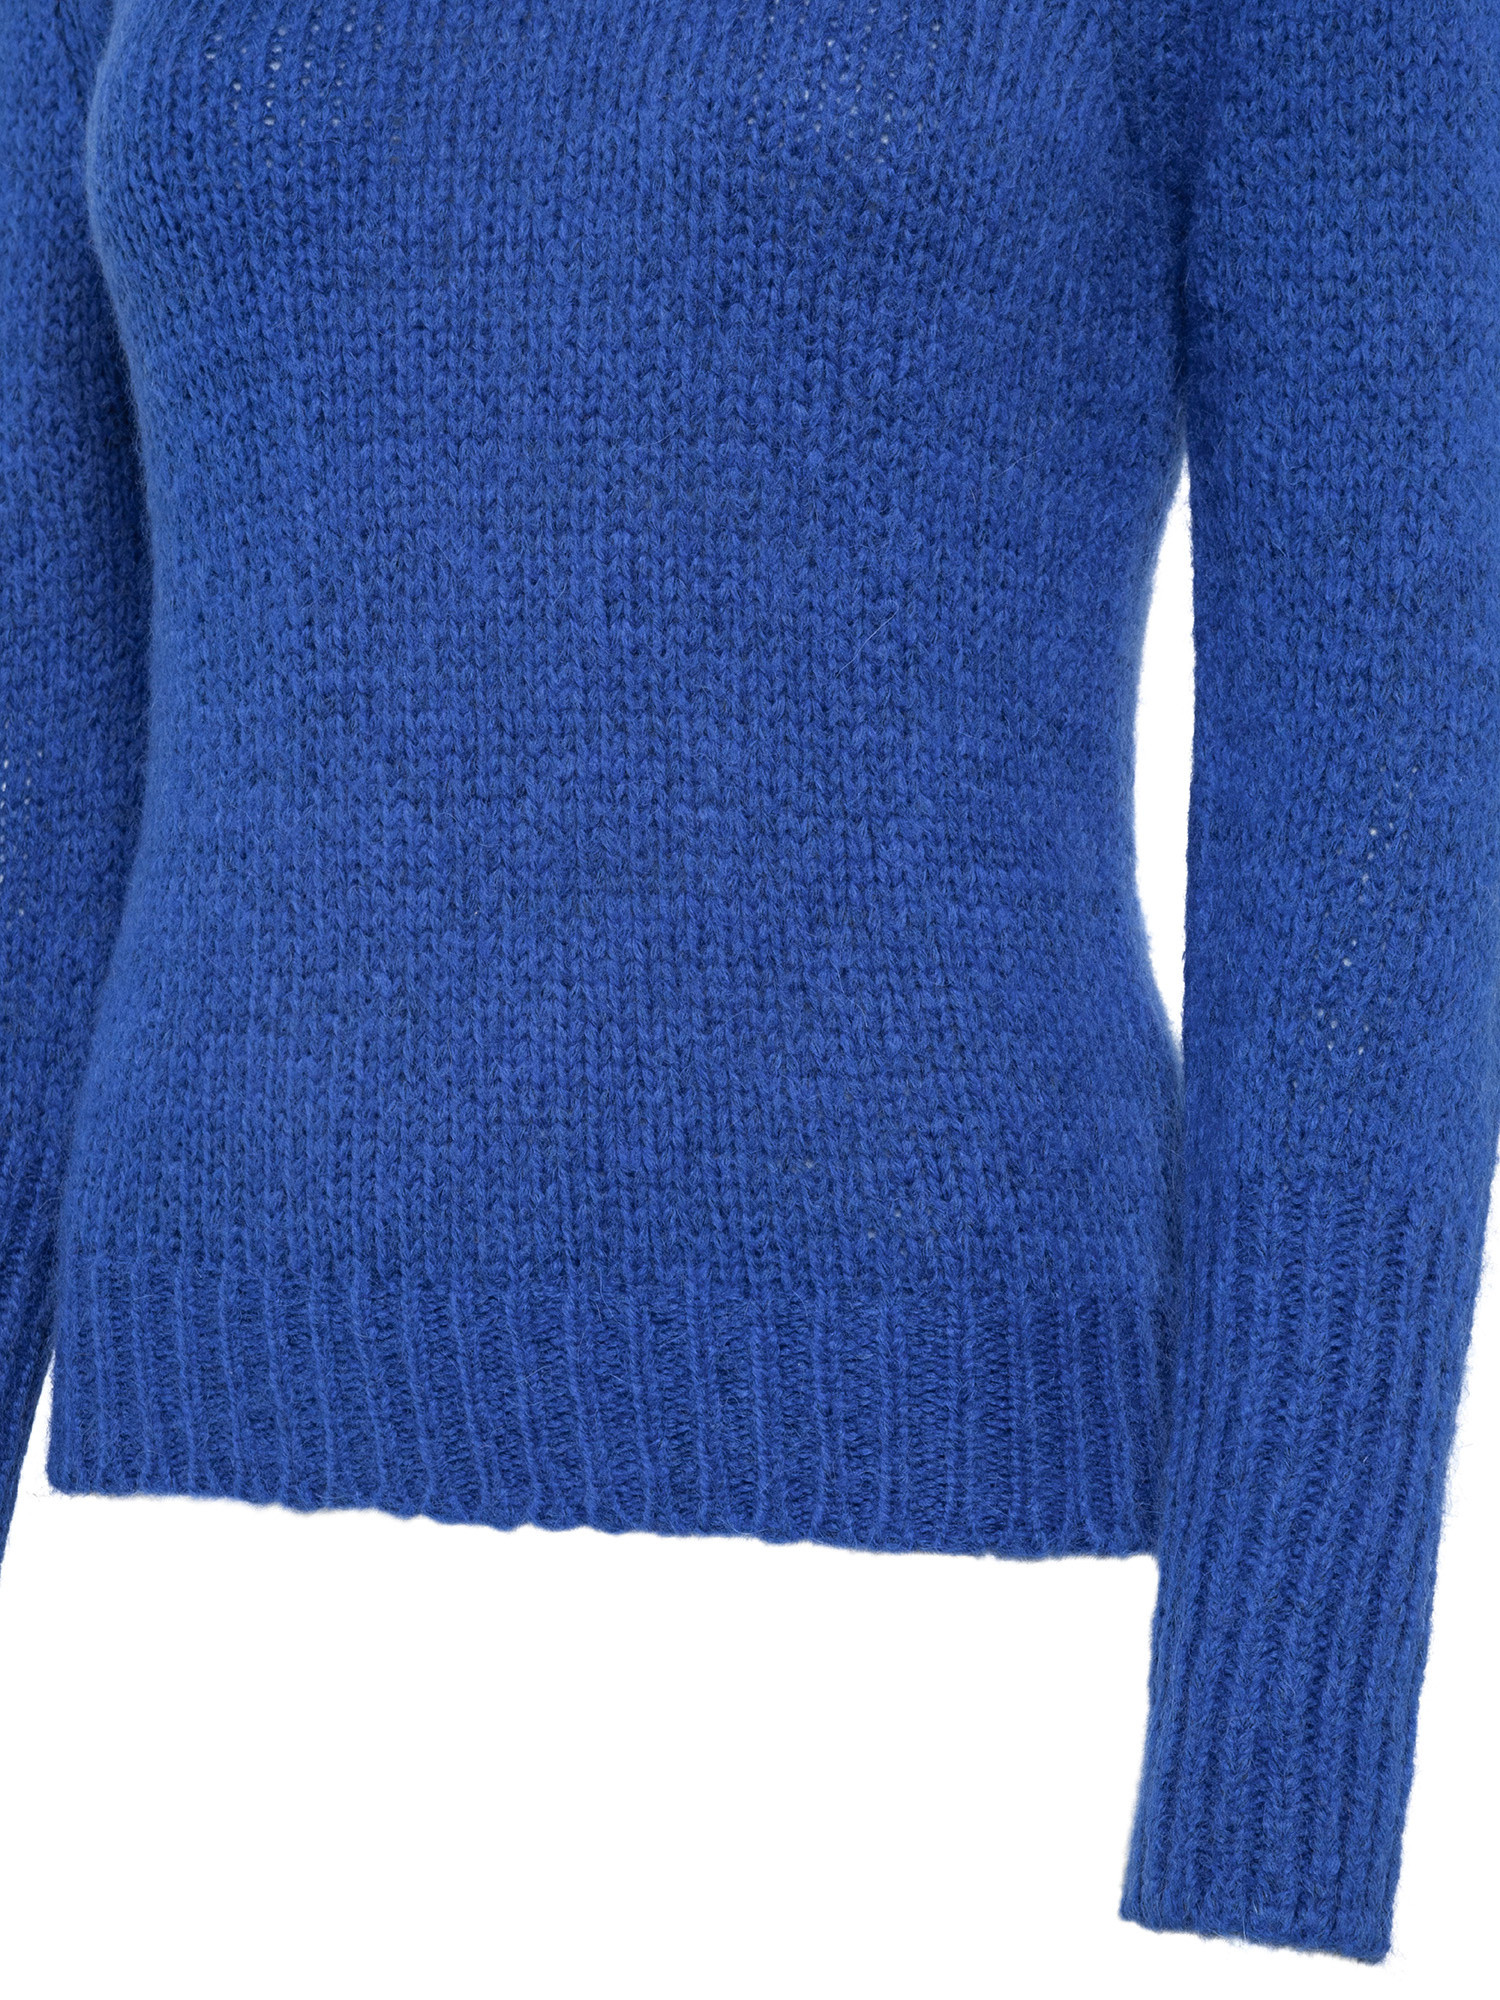 K Collection - Crewneck sweater, Blue, large image number 2